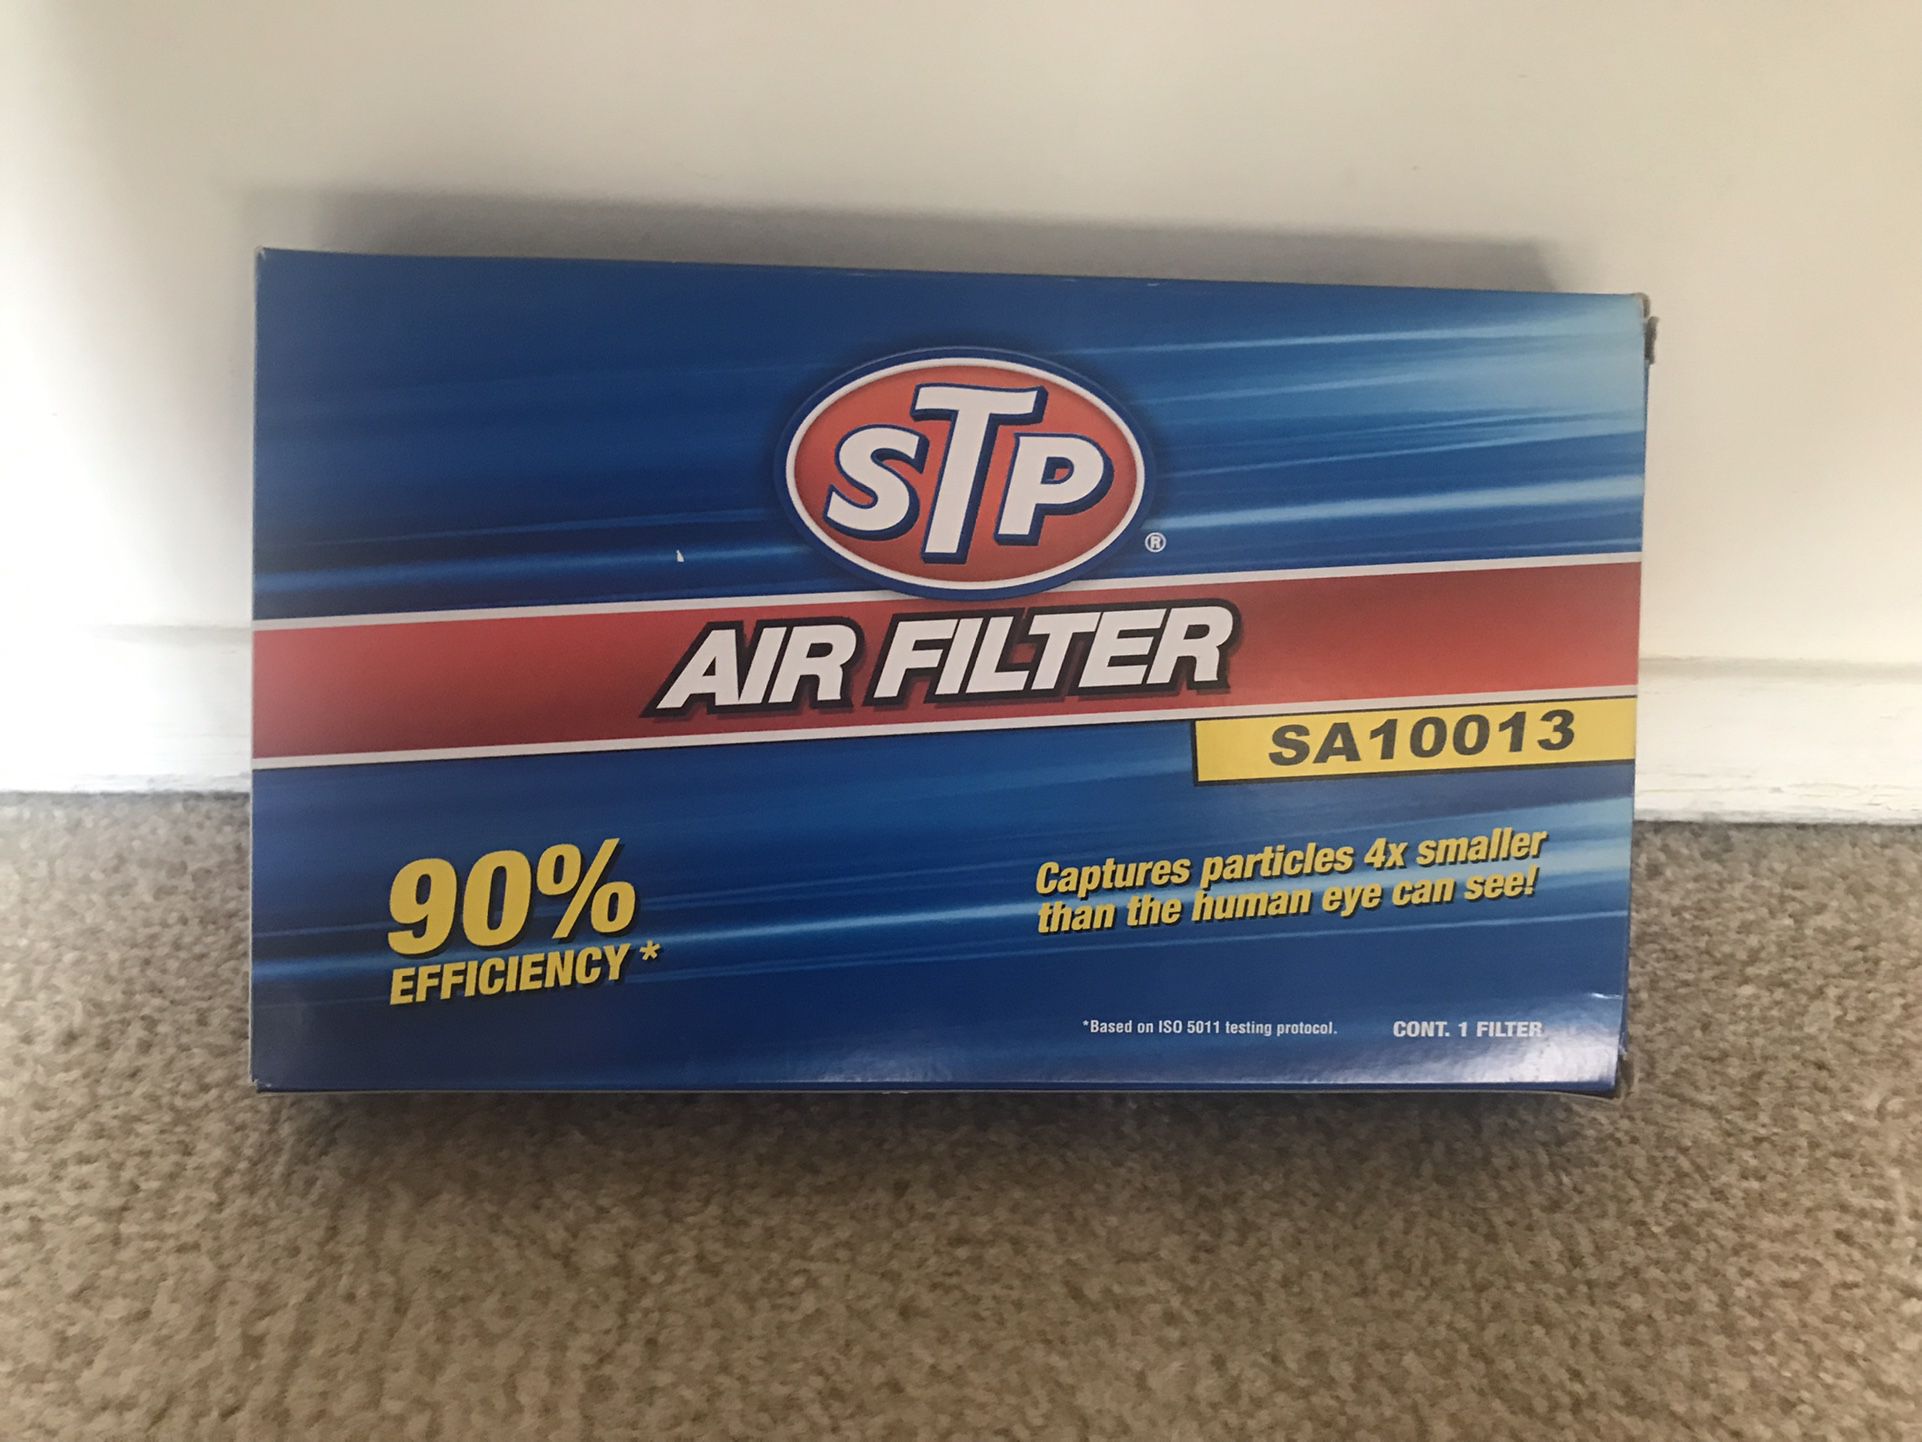 STP Air Filter